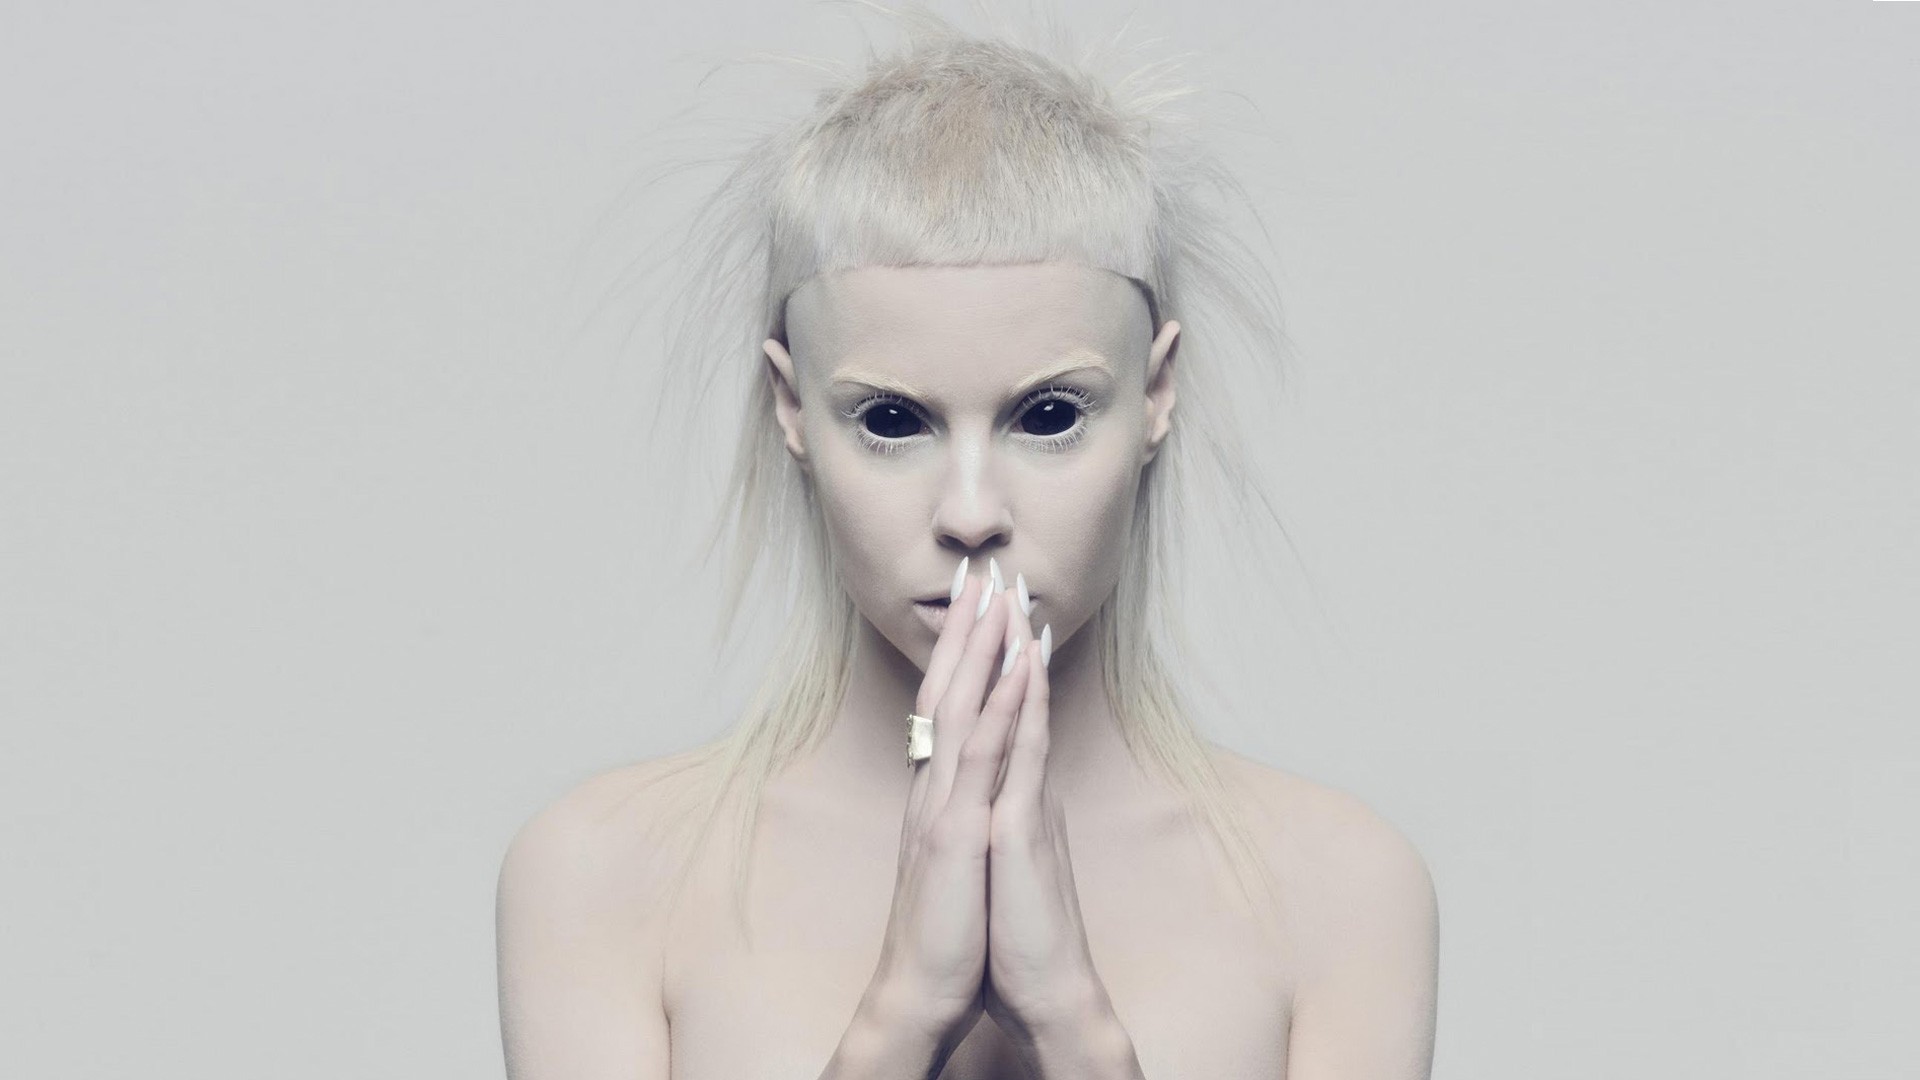 People 1920x1080 Die Antwoord zef Yolandi Visser white hair black sclera singer women implied nude